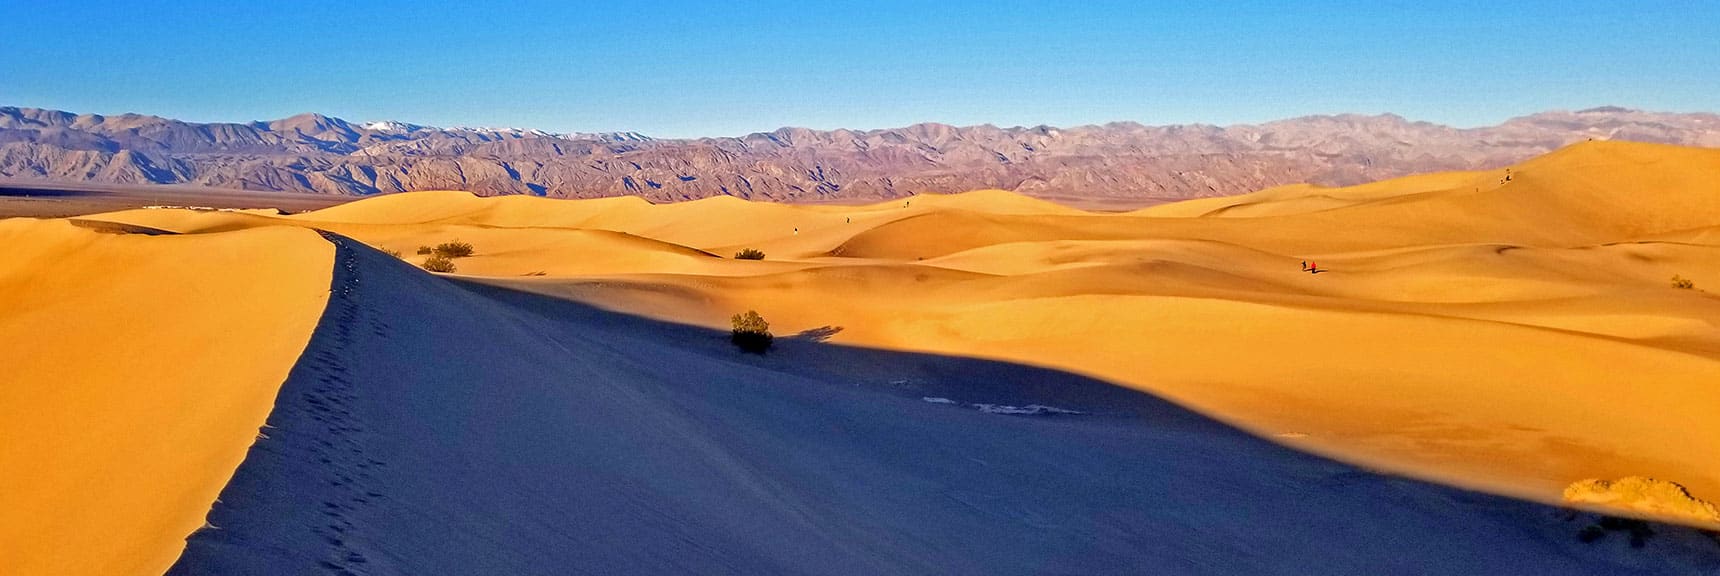 View Northwest | Mesquite Sand Dunes Sunrise | Death Valley National Park, California